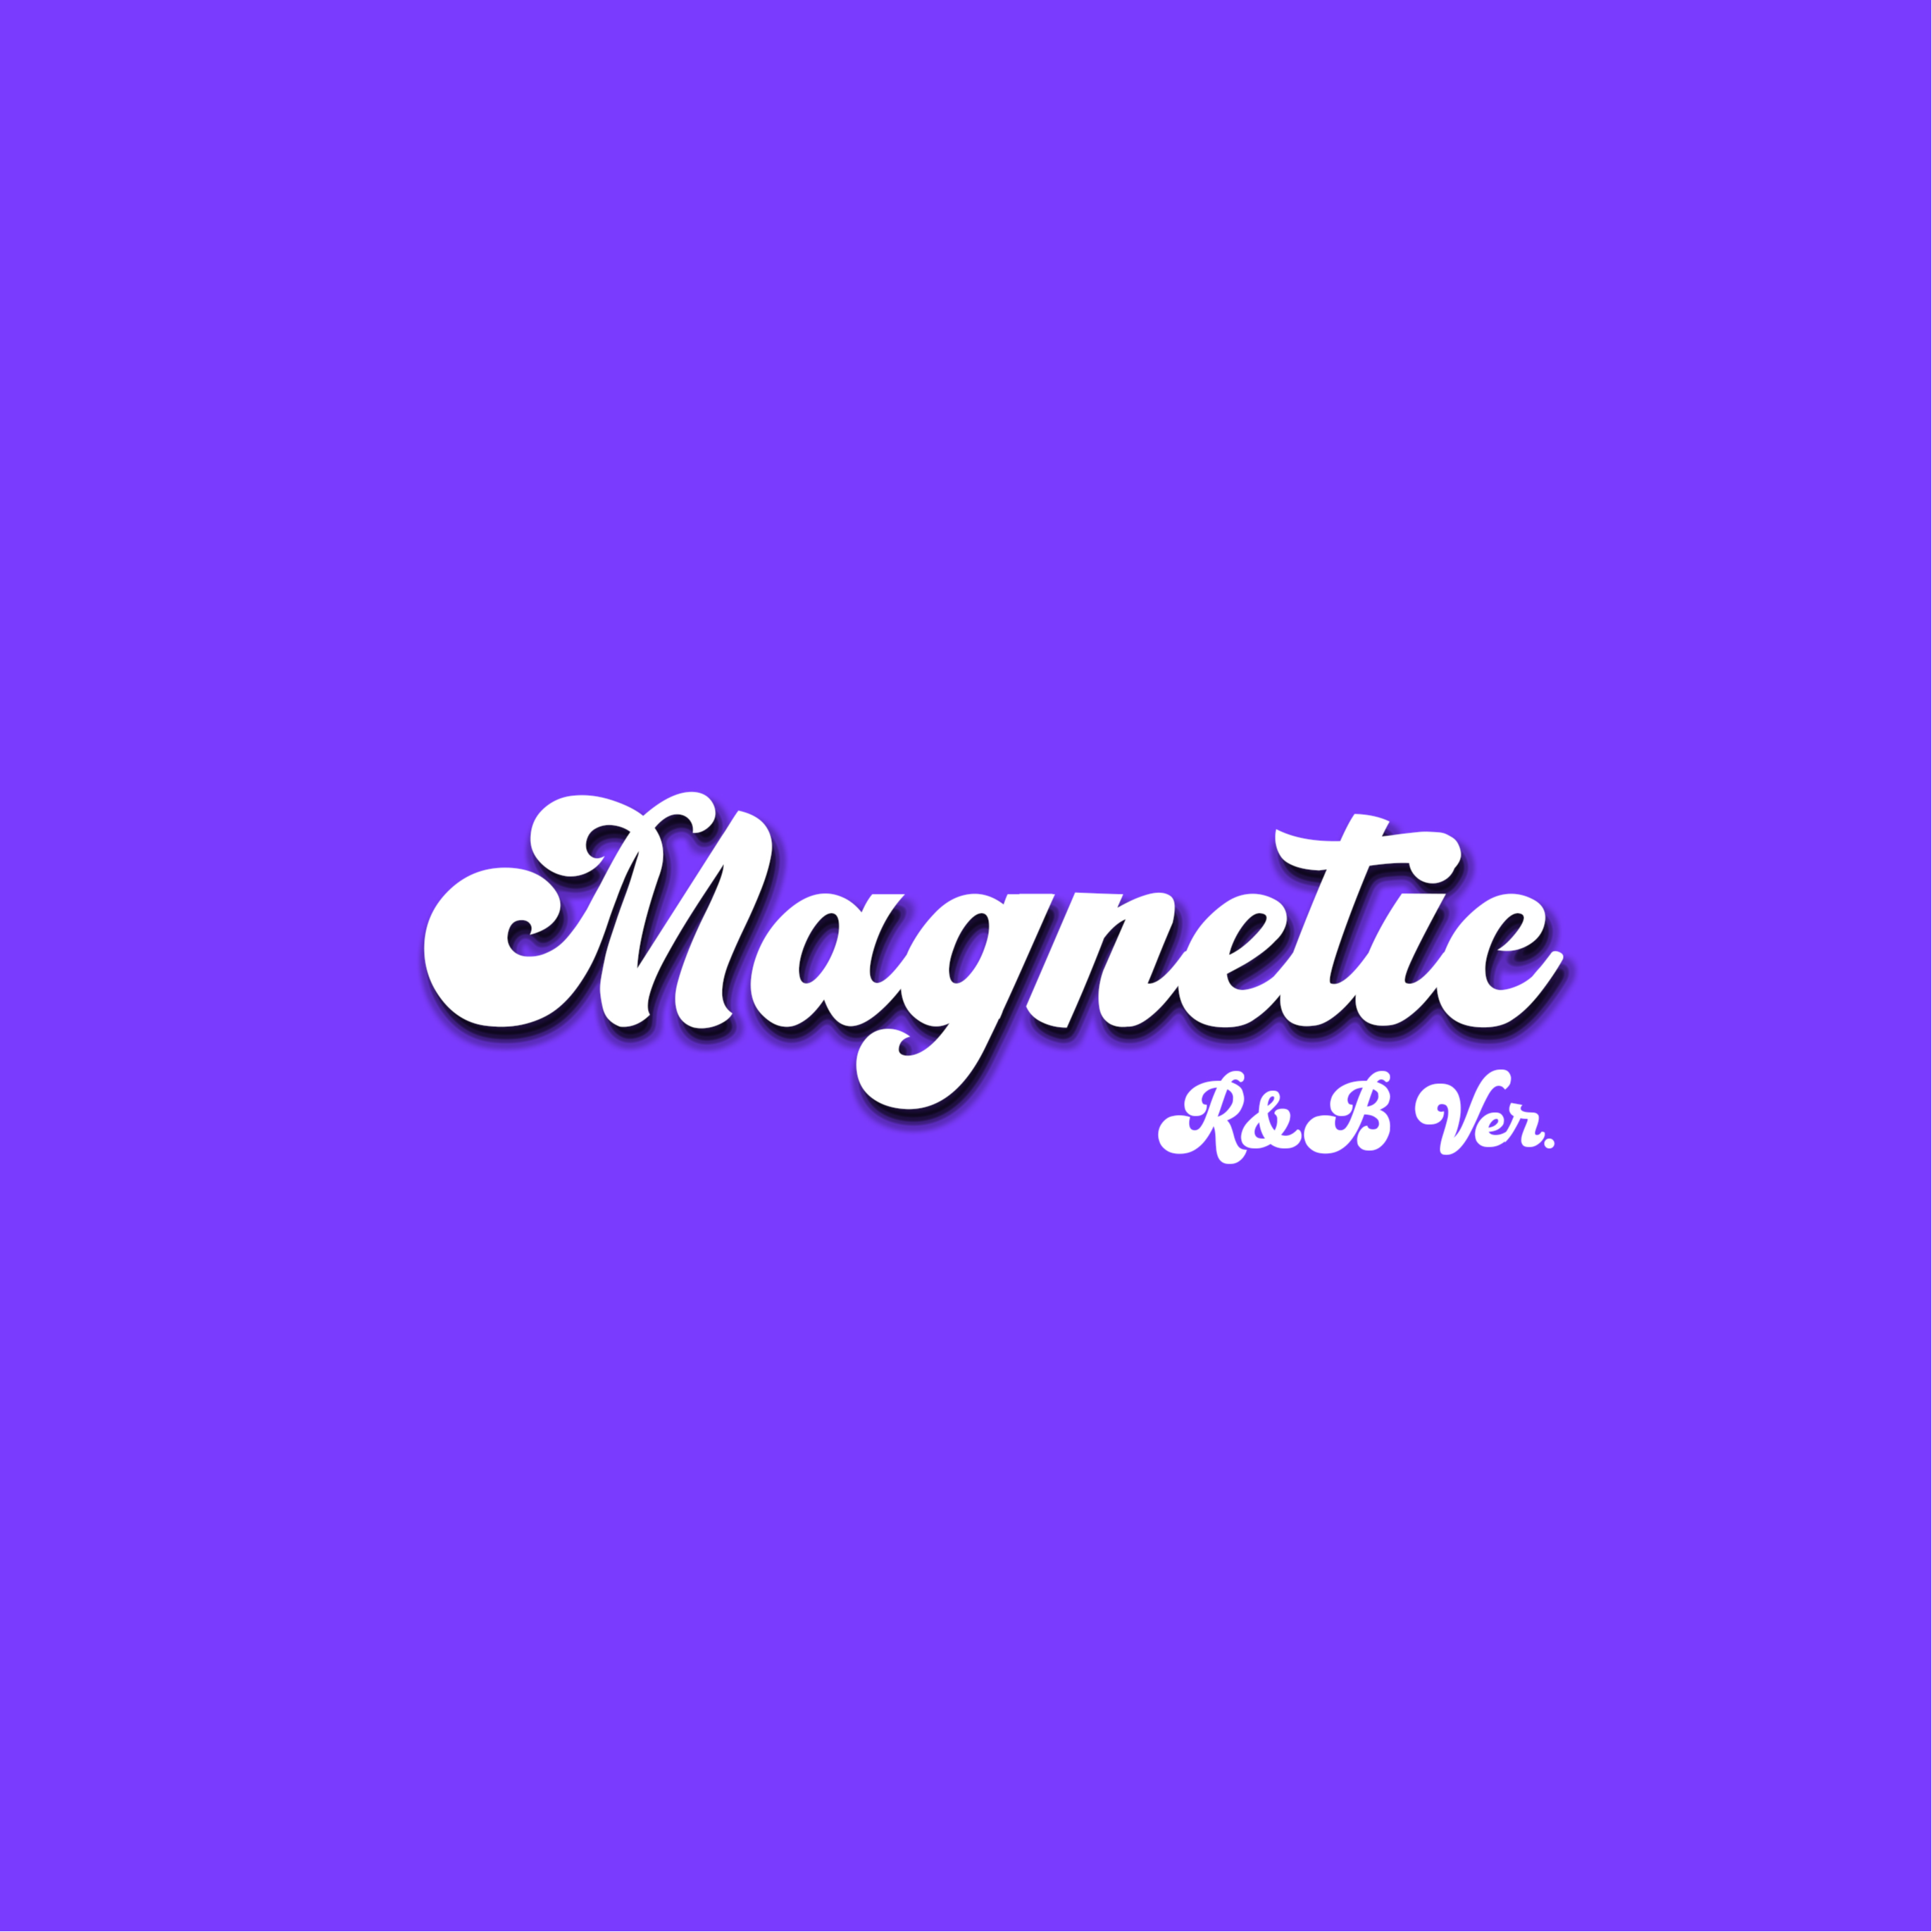 Magnetic (R&B Ver.)专辑